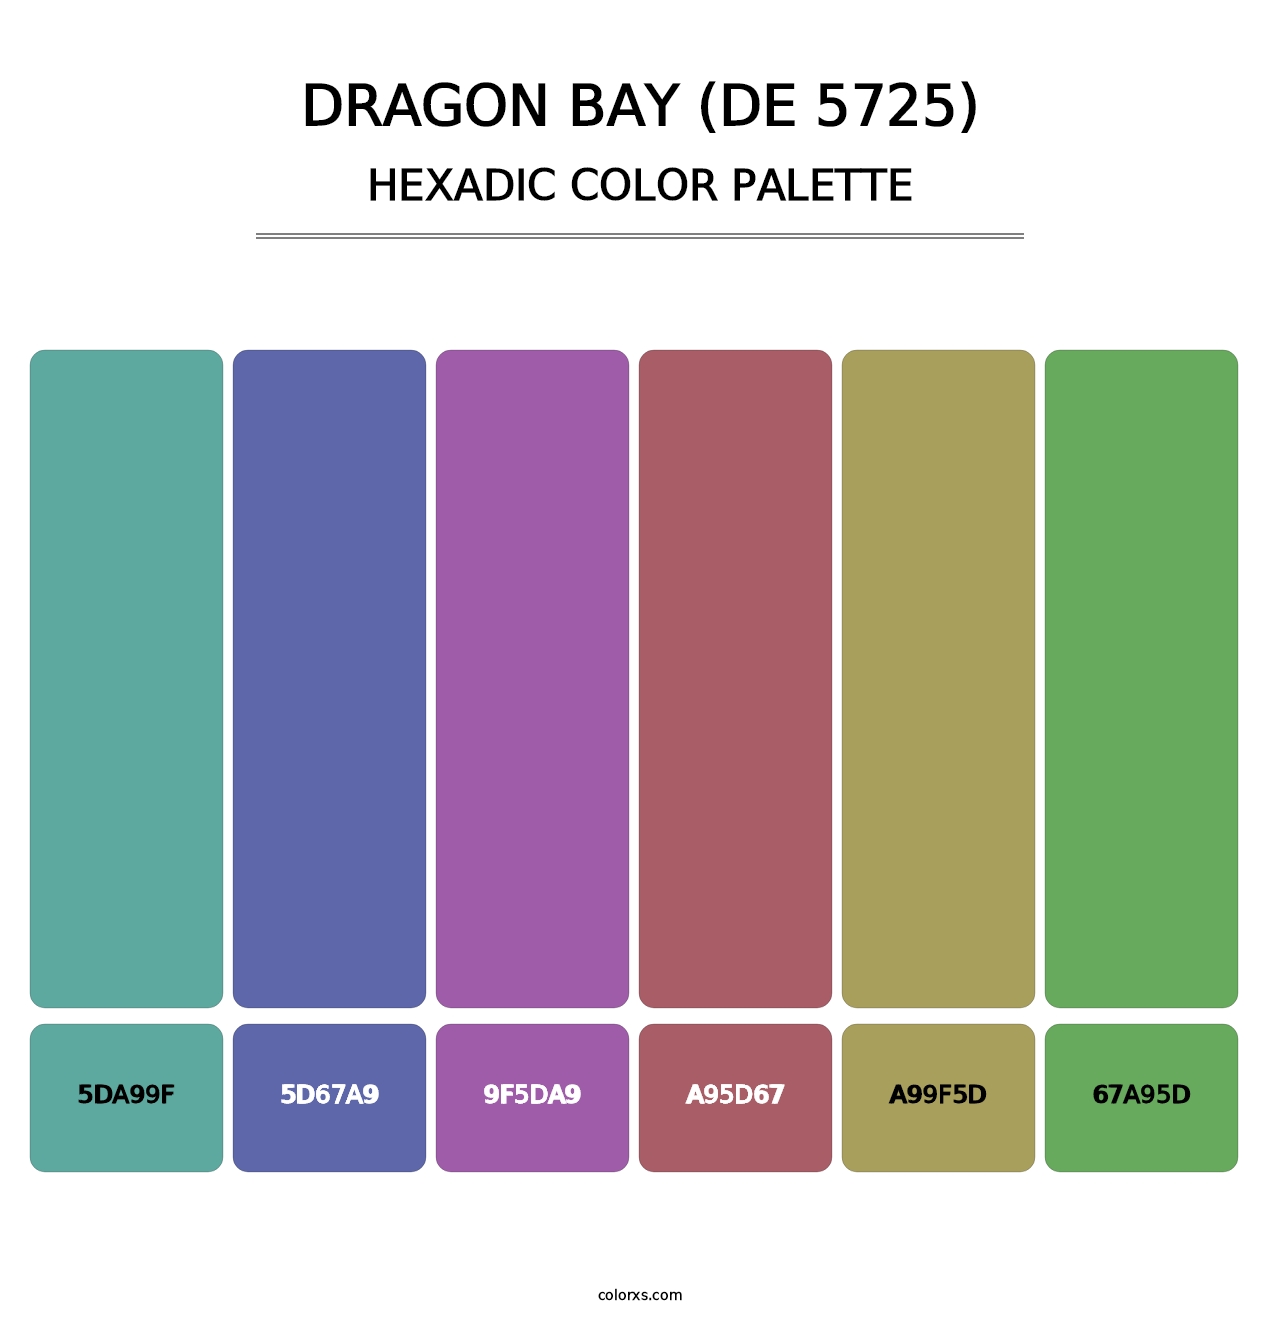 Dragon Bay (DE 5725) - Hexadic Color Palette